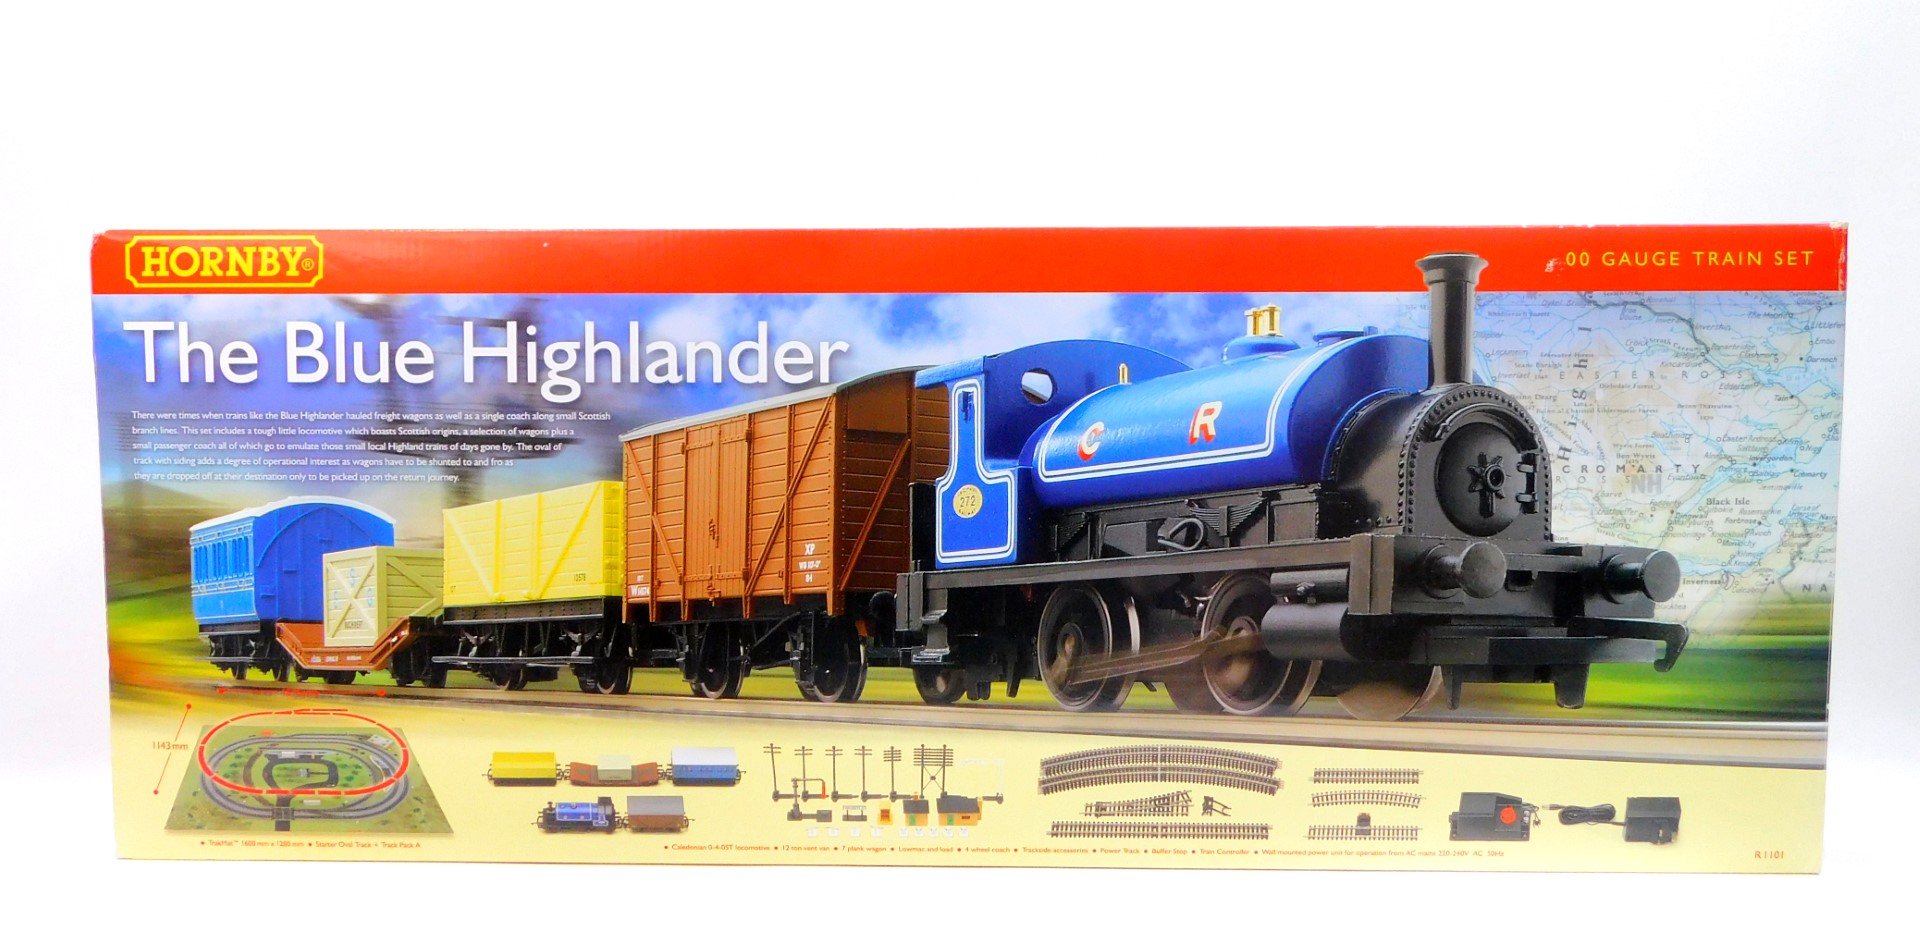 A Hornby The Blue Highlander OO-gauge train set, with Caledonian 0-4-0T locomotive, Vent van, 7